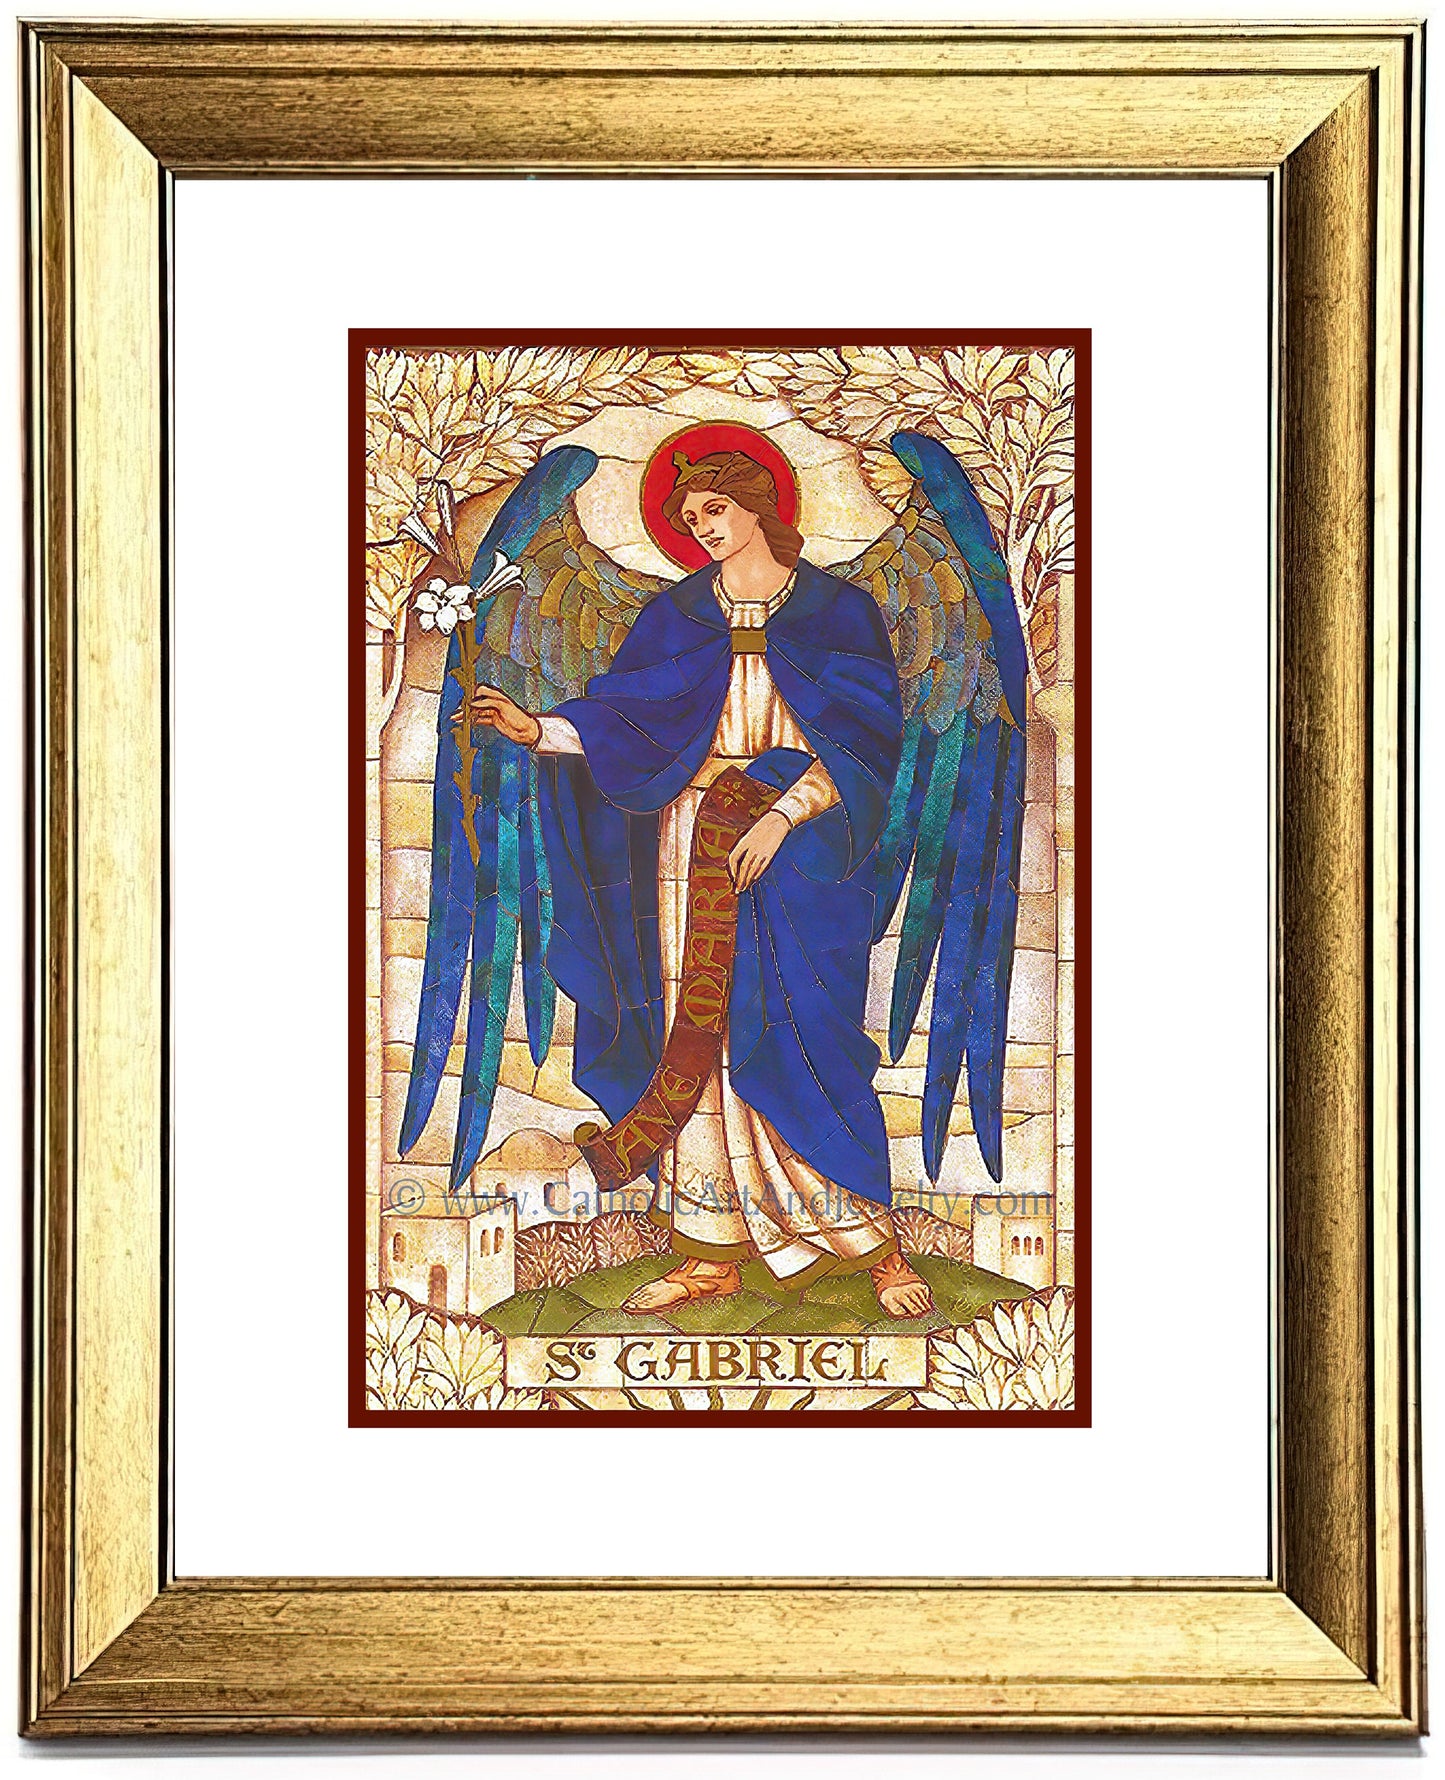 Archangel Gabriel – based on a Vintage Stained Glass Window – Art Nouveau – Catholic Art Print – Archival Quality